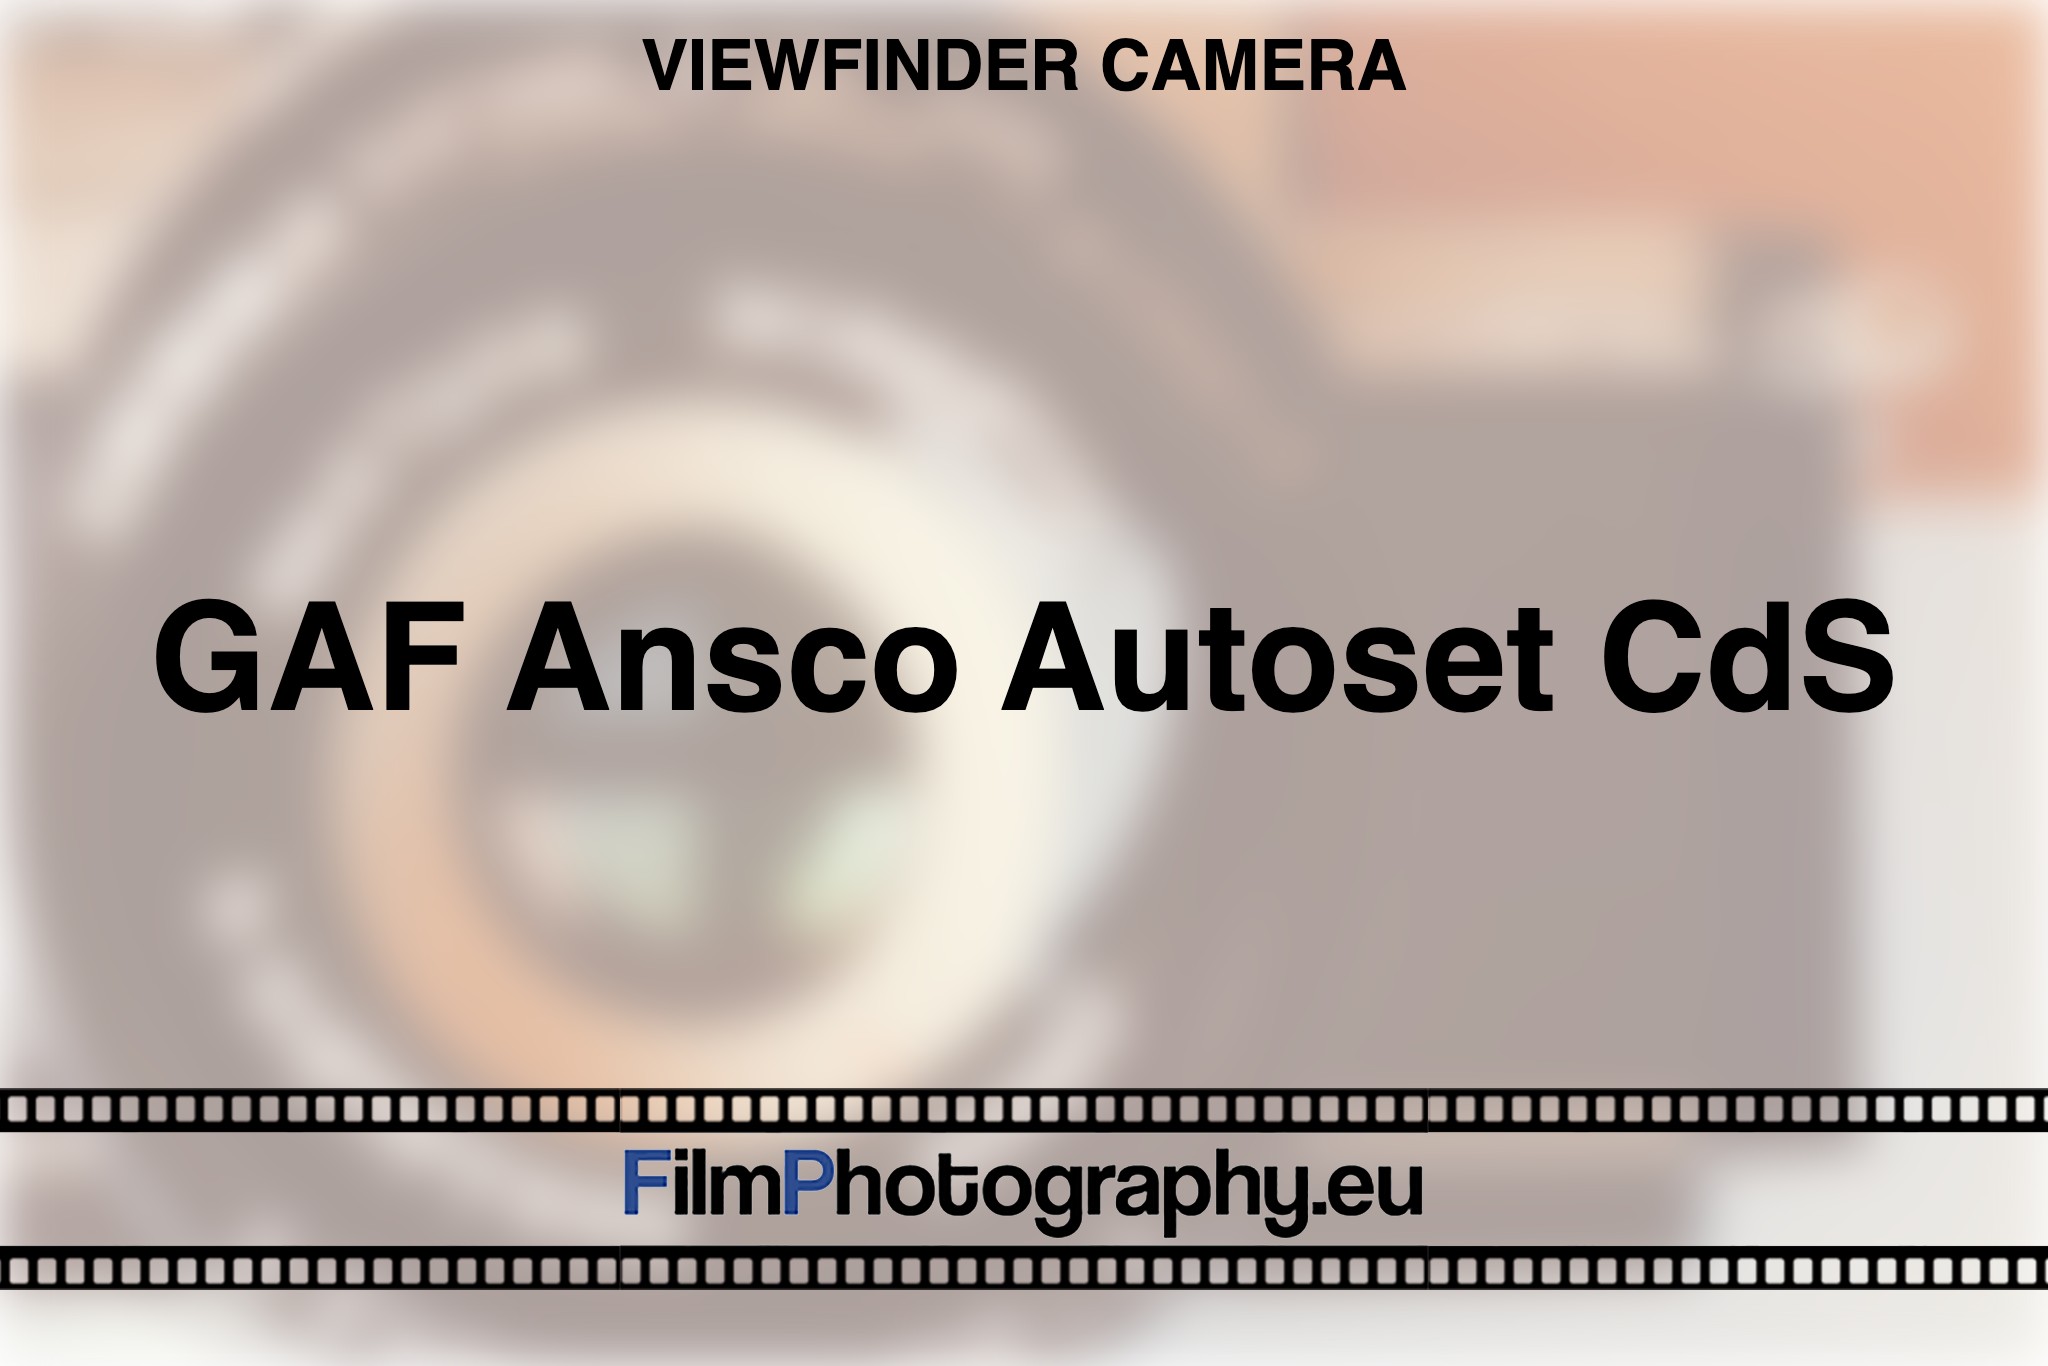 gaf-ansco-autoset-cds-viewfinder-camera-bnv